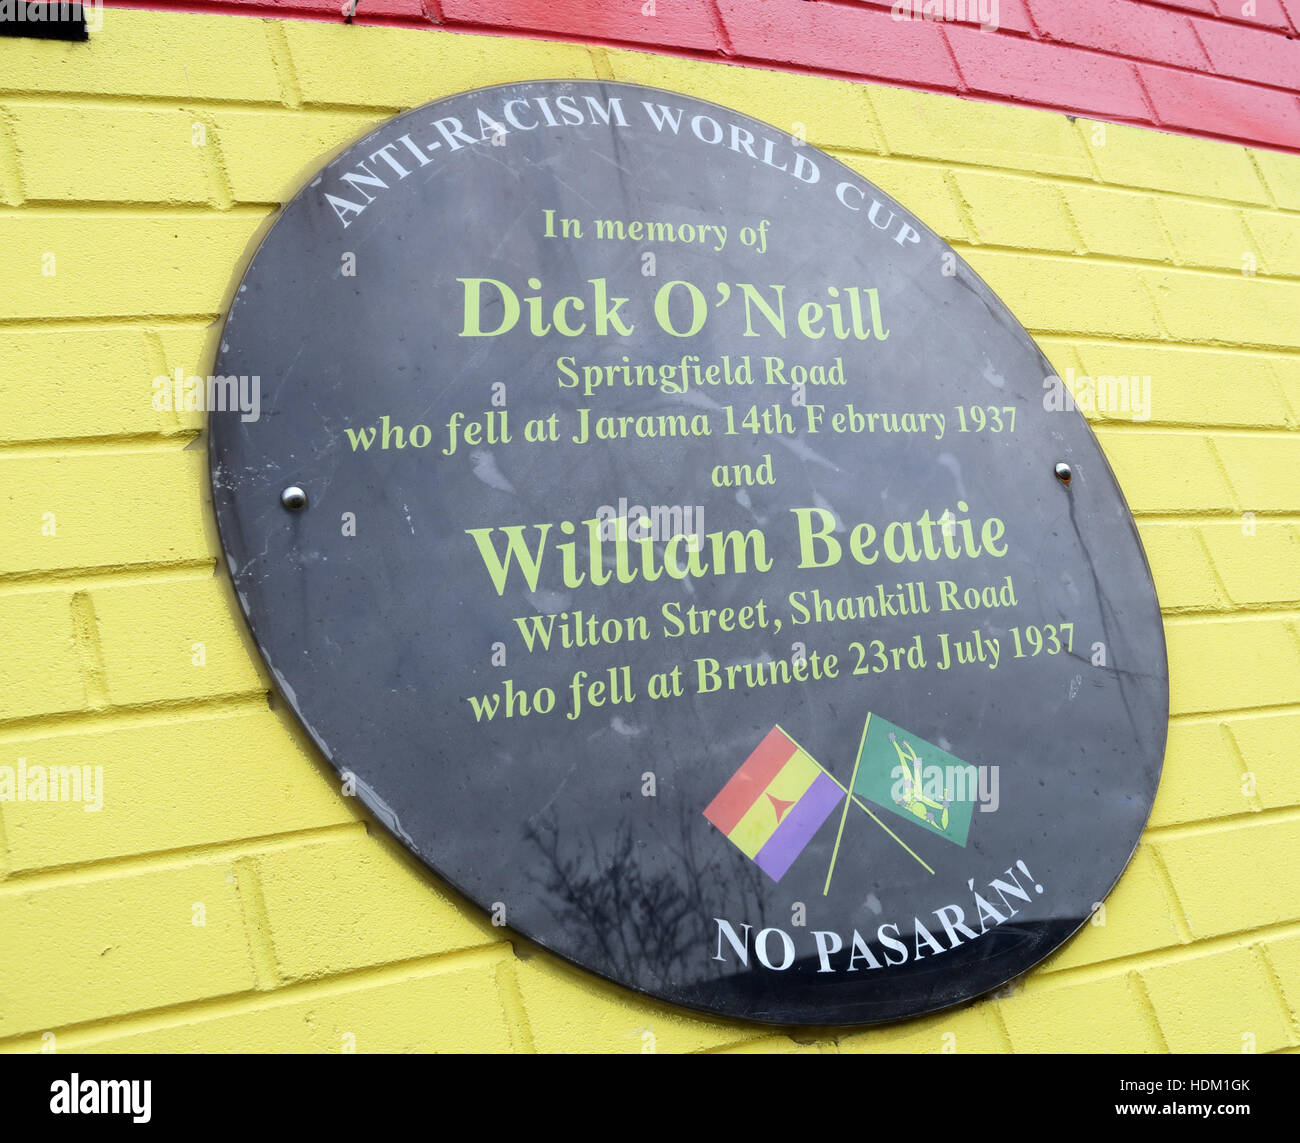 L'Anti-racisme de Belfast - Coupe du monde Dick emerica et William Beattie, Springfield Road & Wilton Road Shankill Road, Banque D'Images